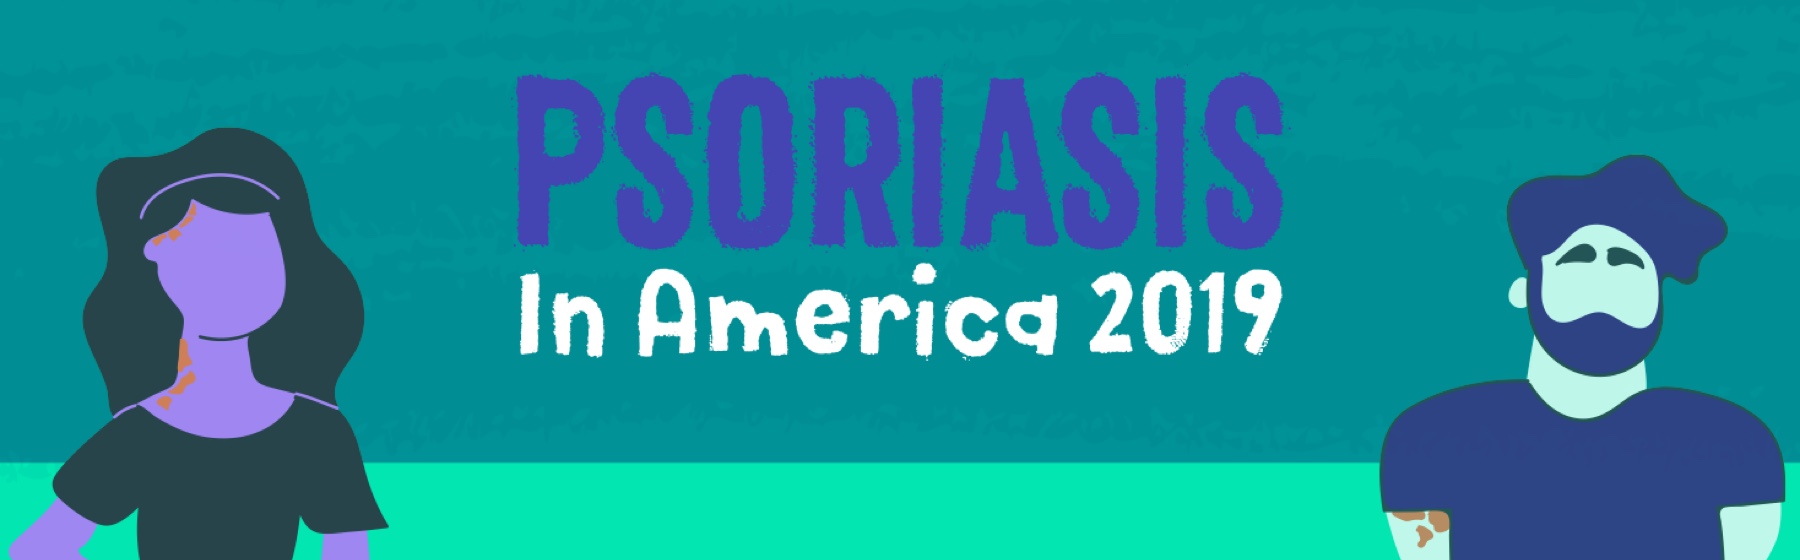 Psoriasis In America 2019